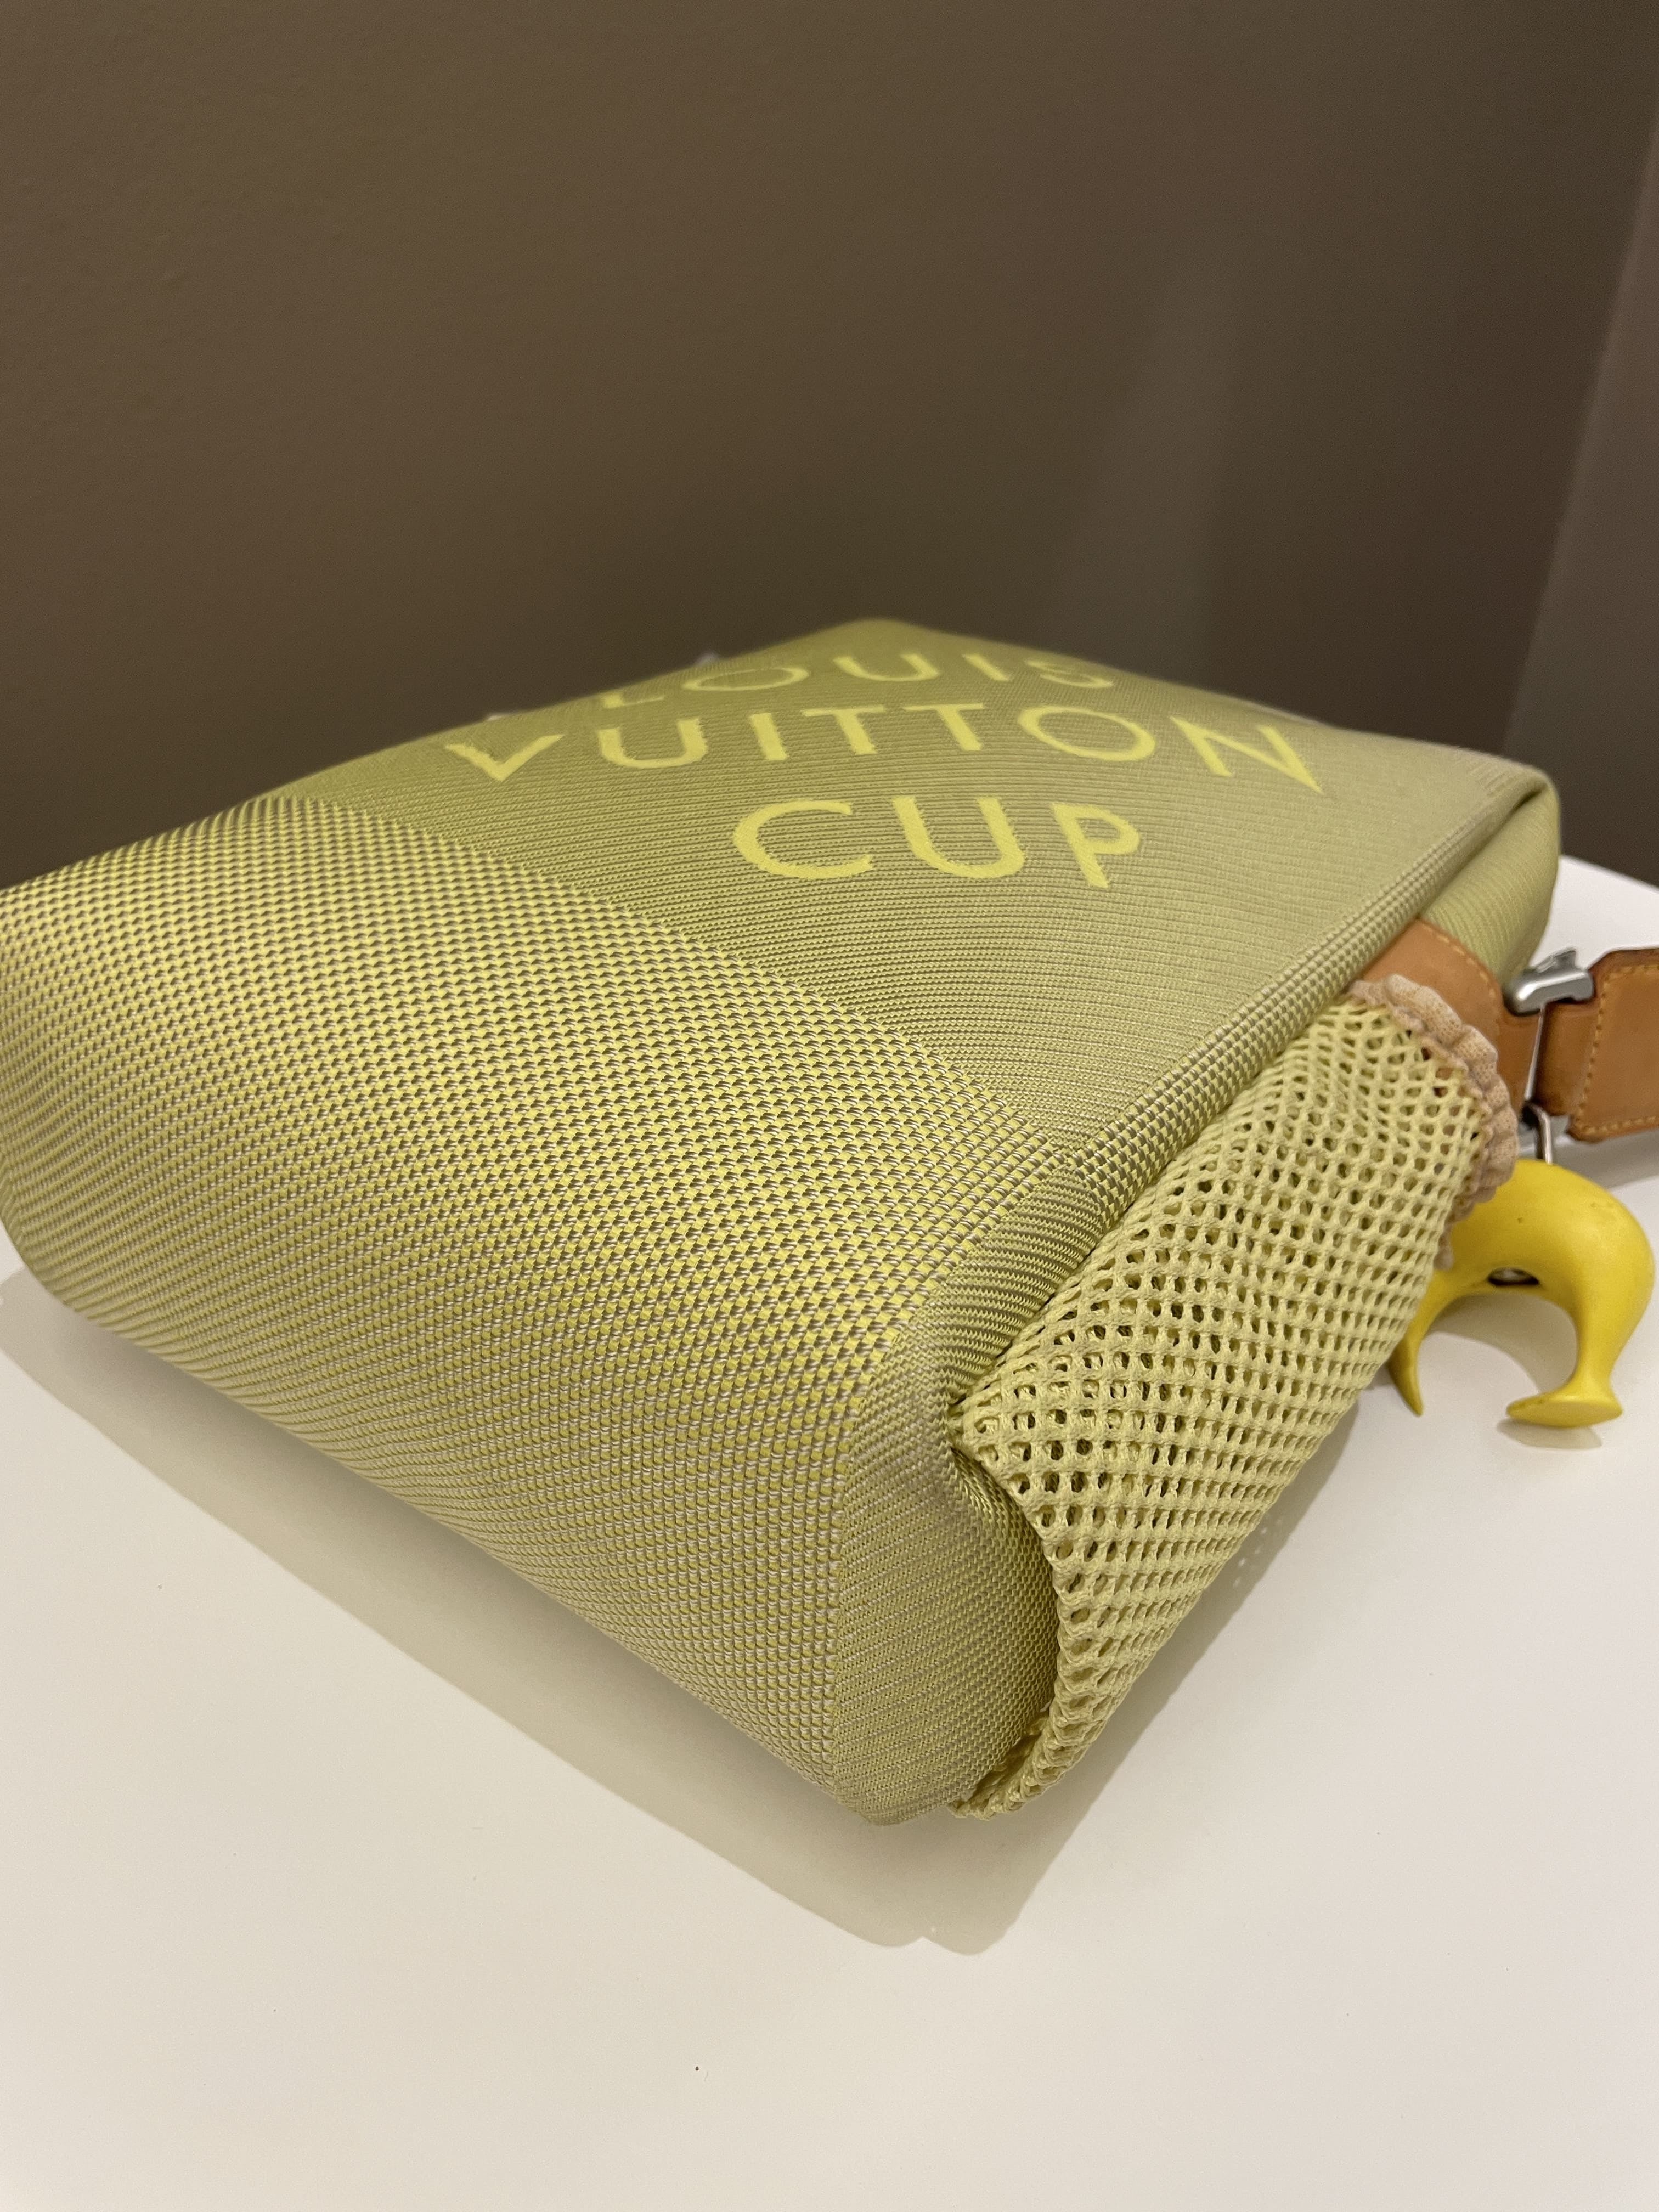 Louis Vuitton Cup Holder